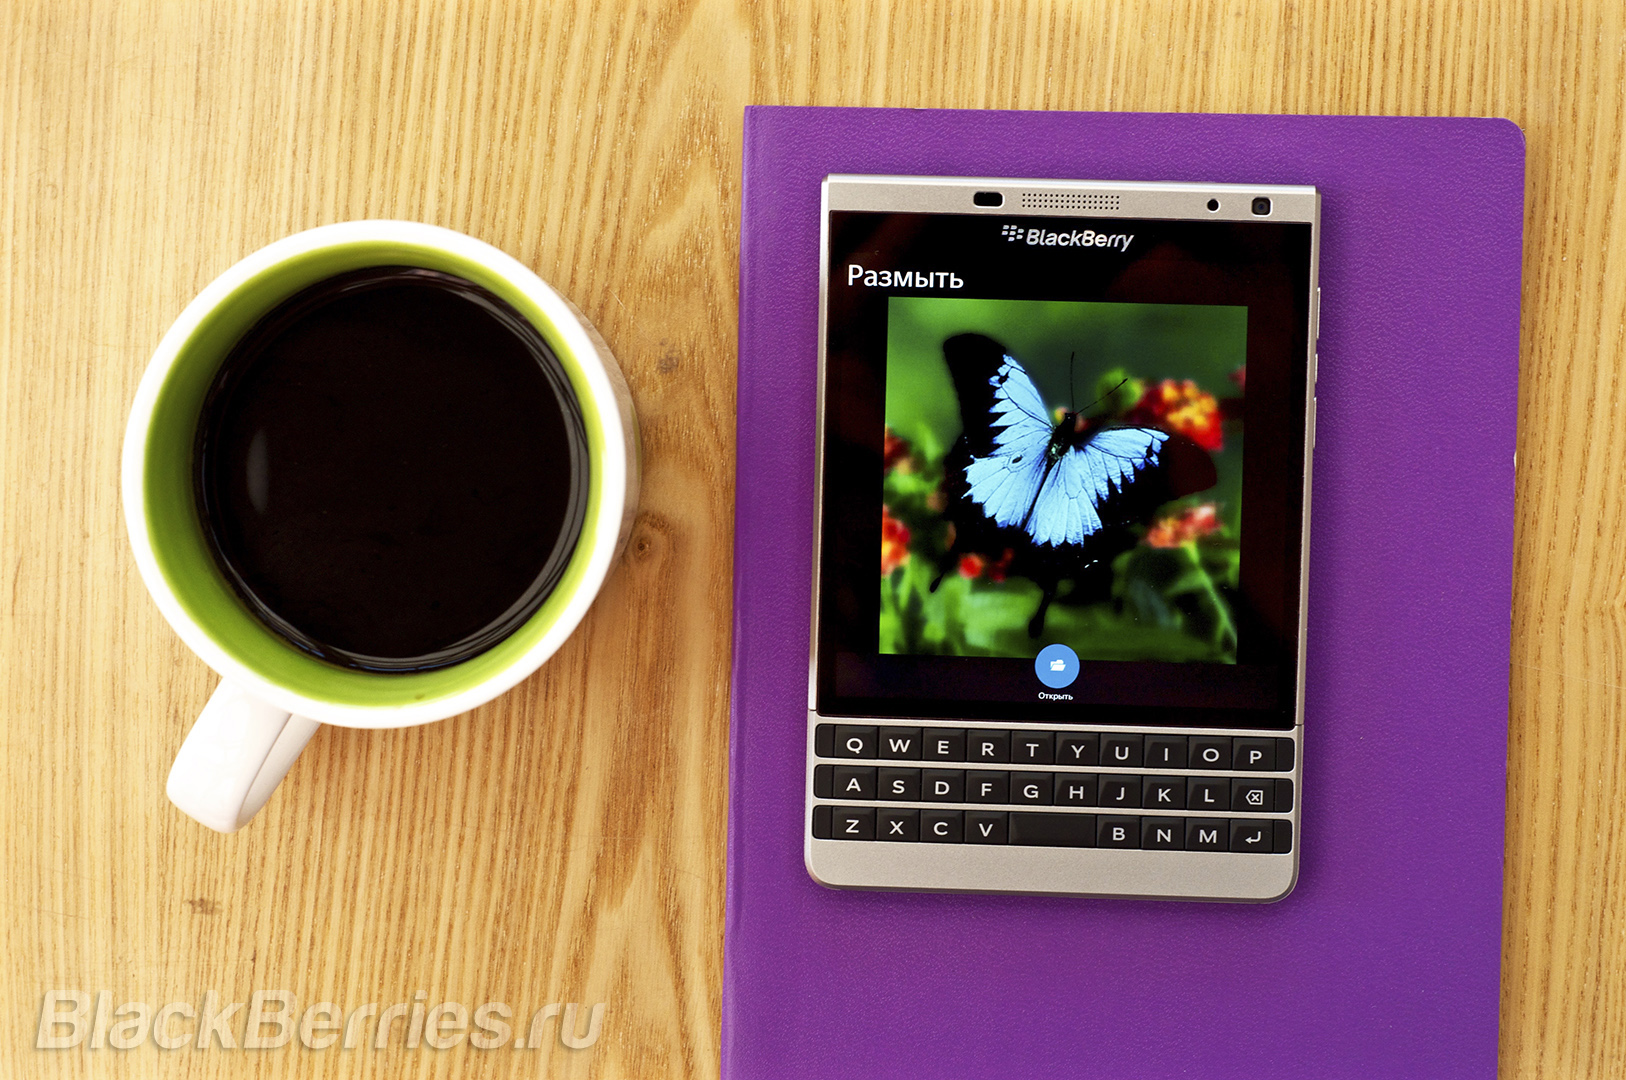 BlackBerry-Passport-Silver-Edition-Review-16